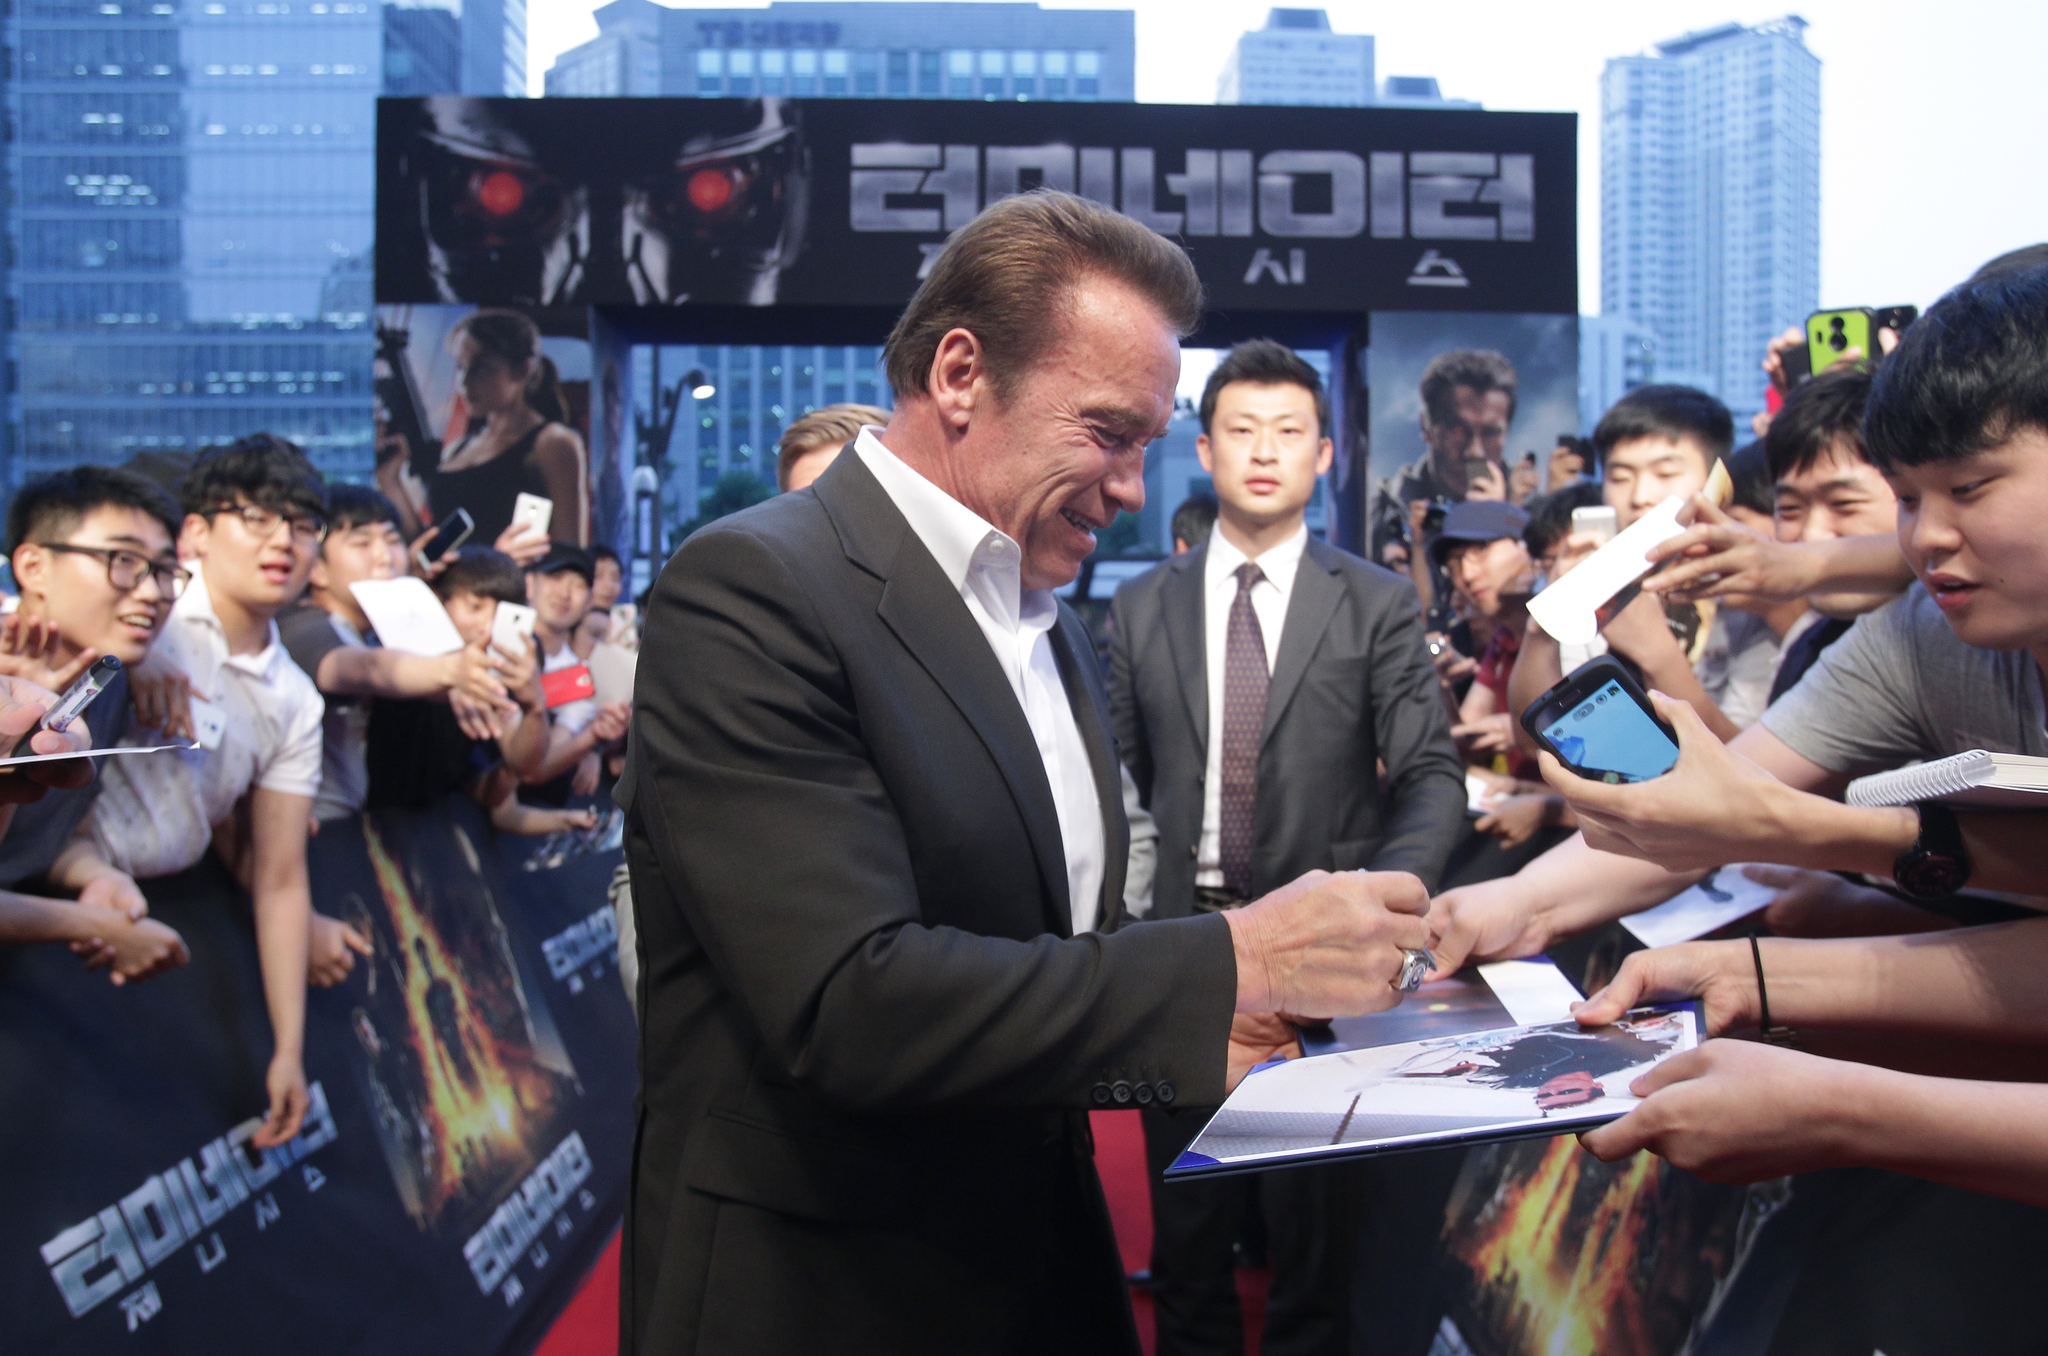 Arnold Schwarzenegger at event of Terminator Genisys (2015)